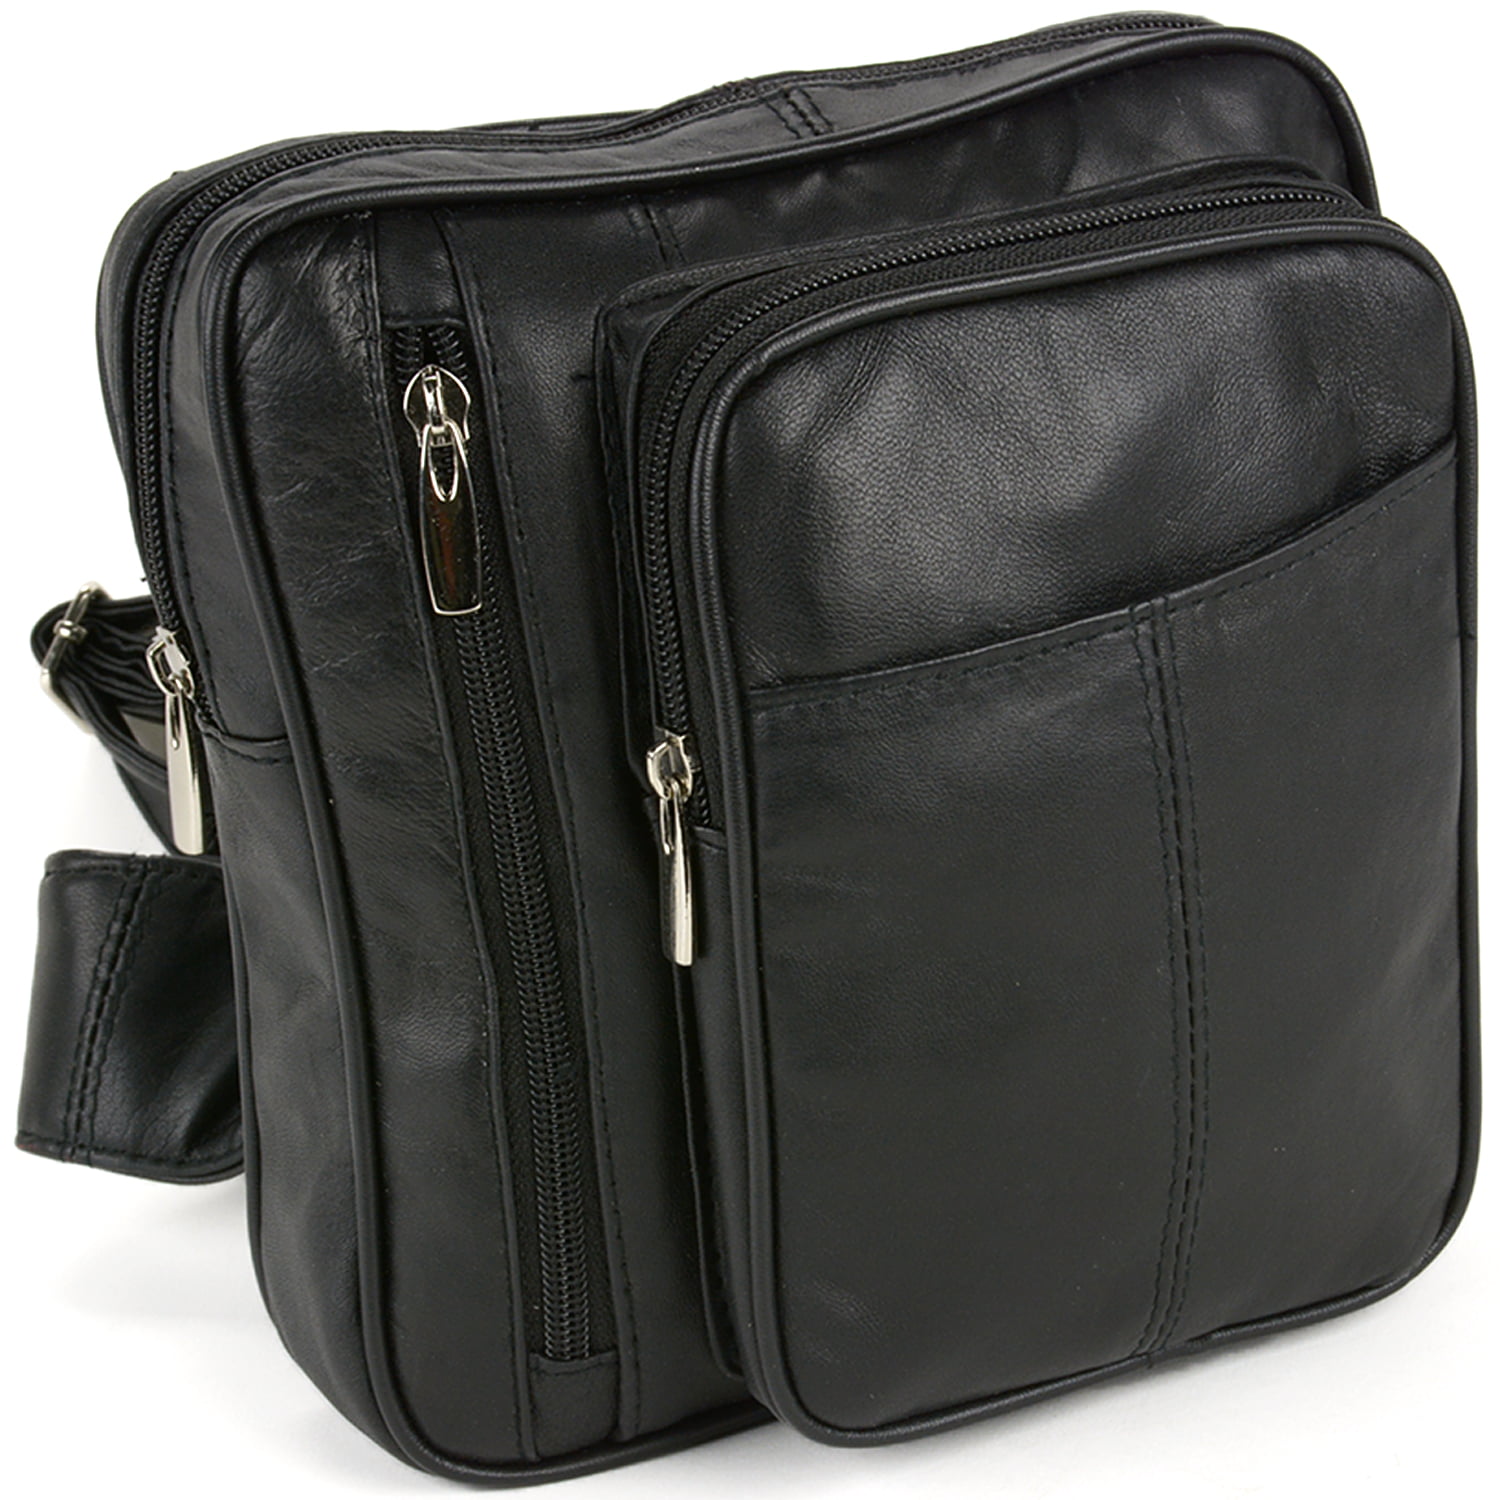 SBR Designs - Leather Cross Body Bag Organizer Clutch Travel Purse Messenger Backpack Style ...